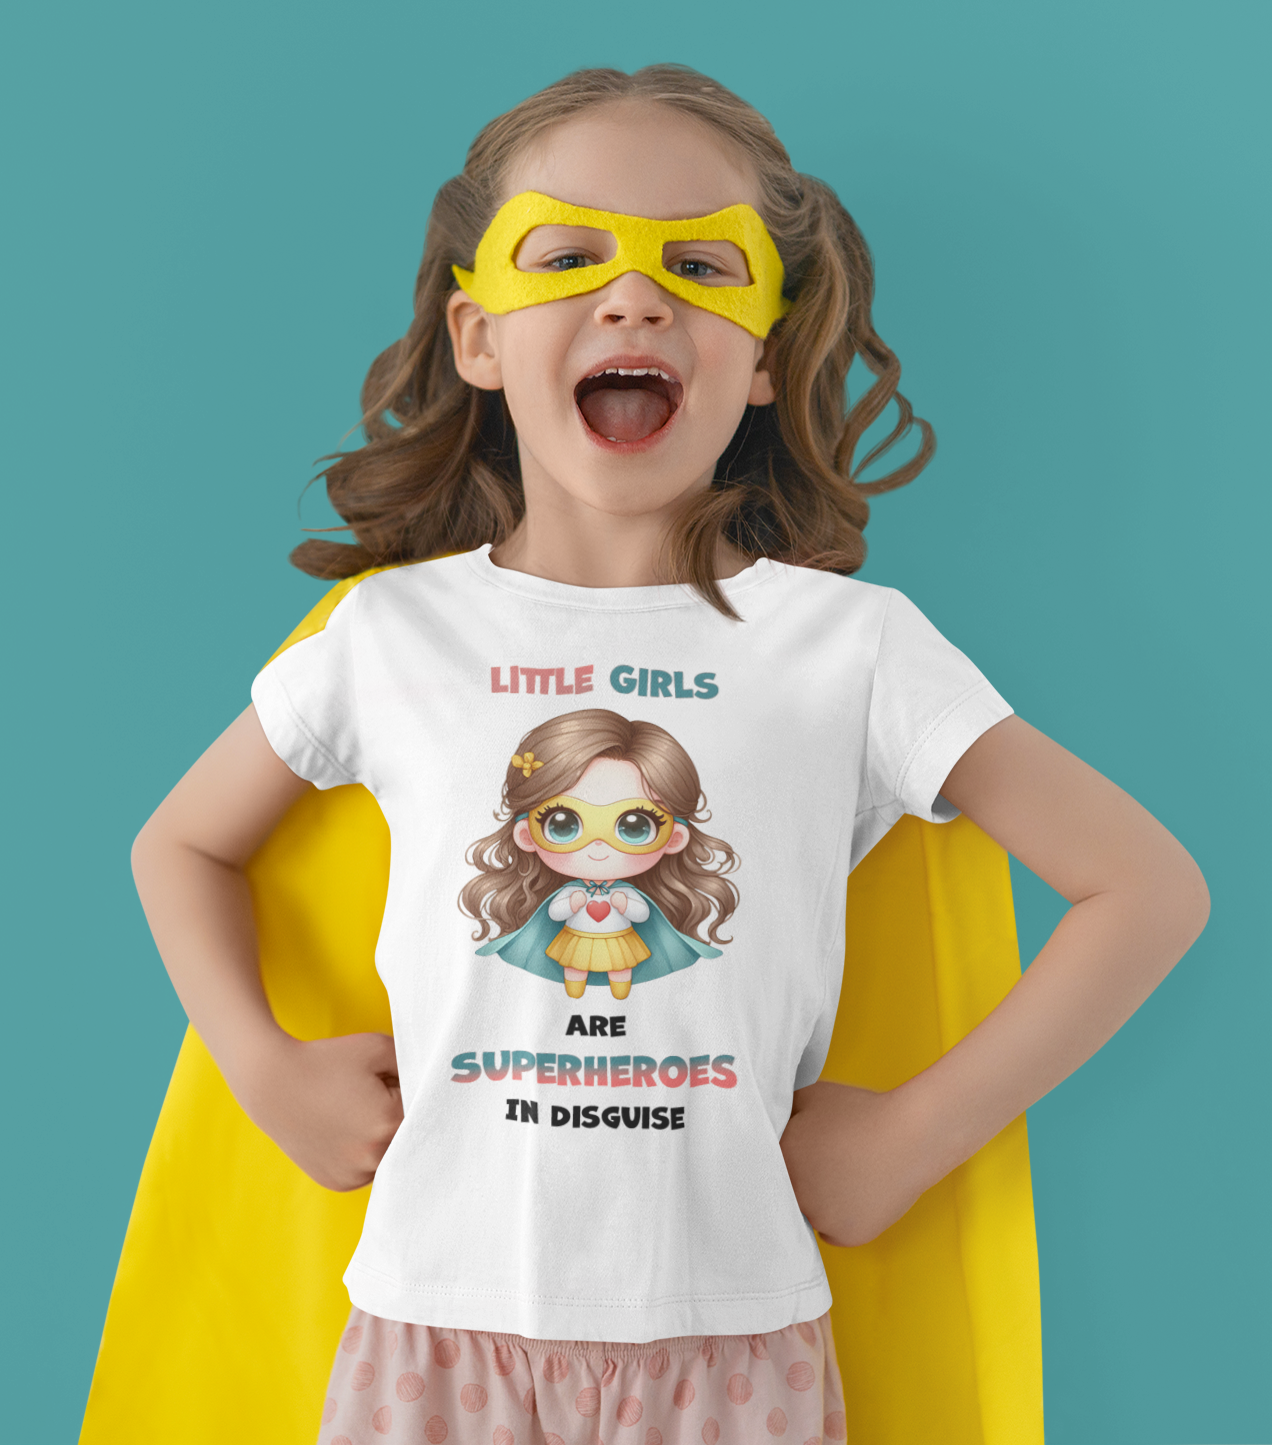 Superhero Kids T-Shirts